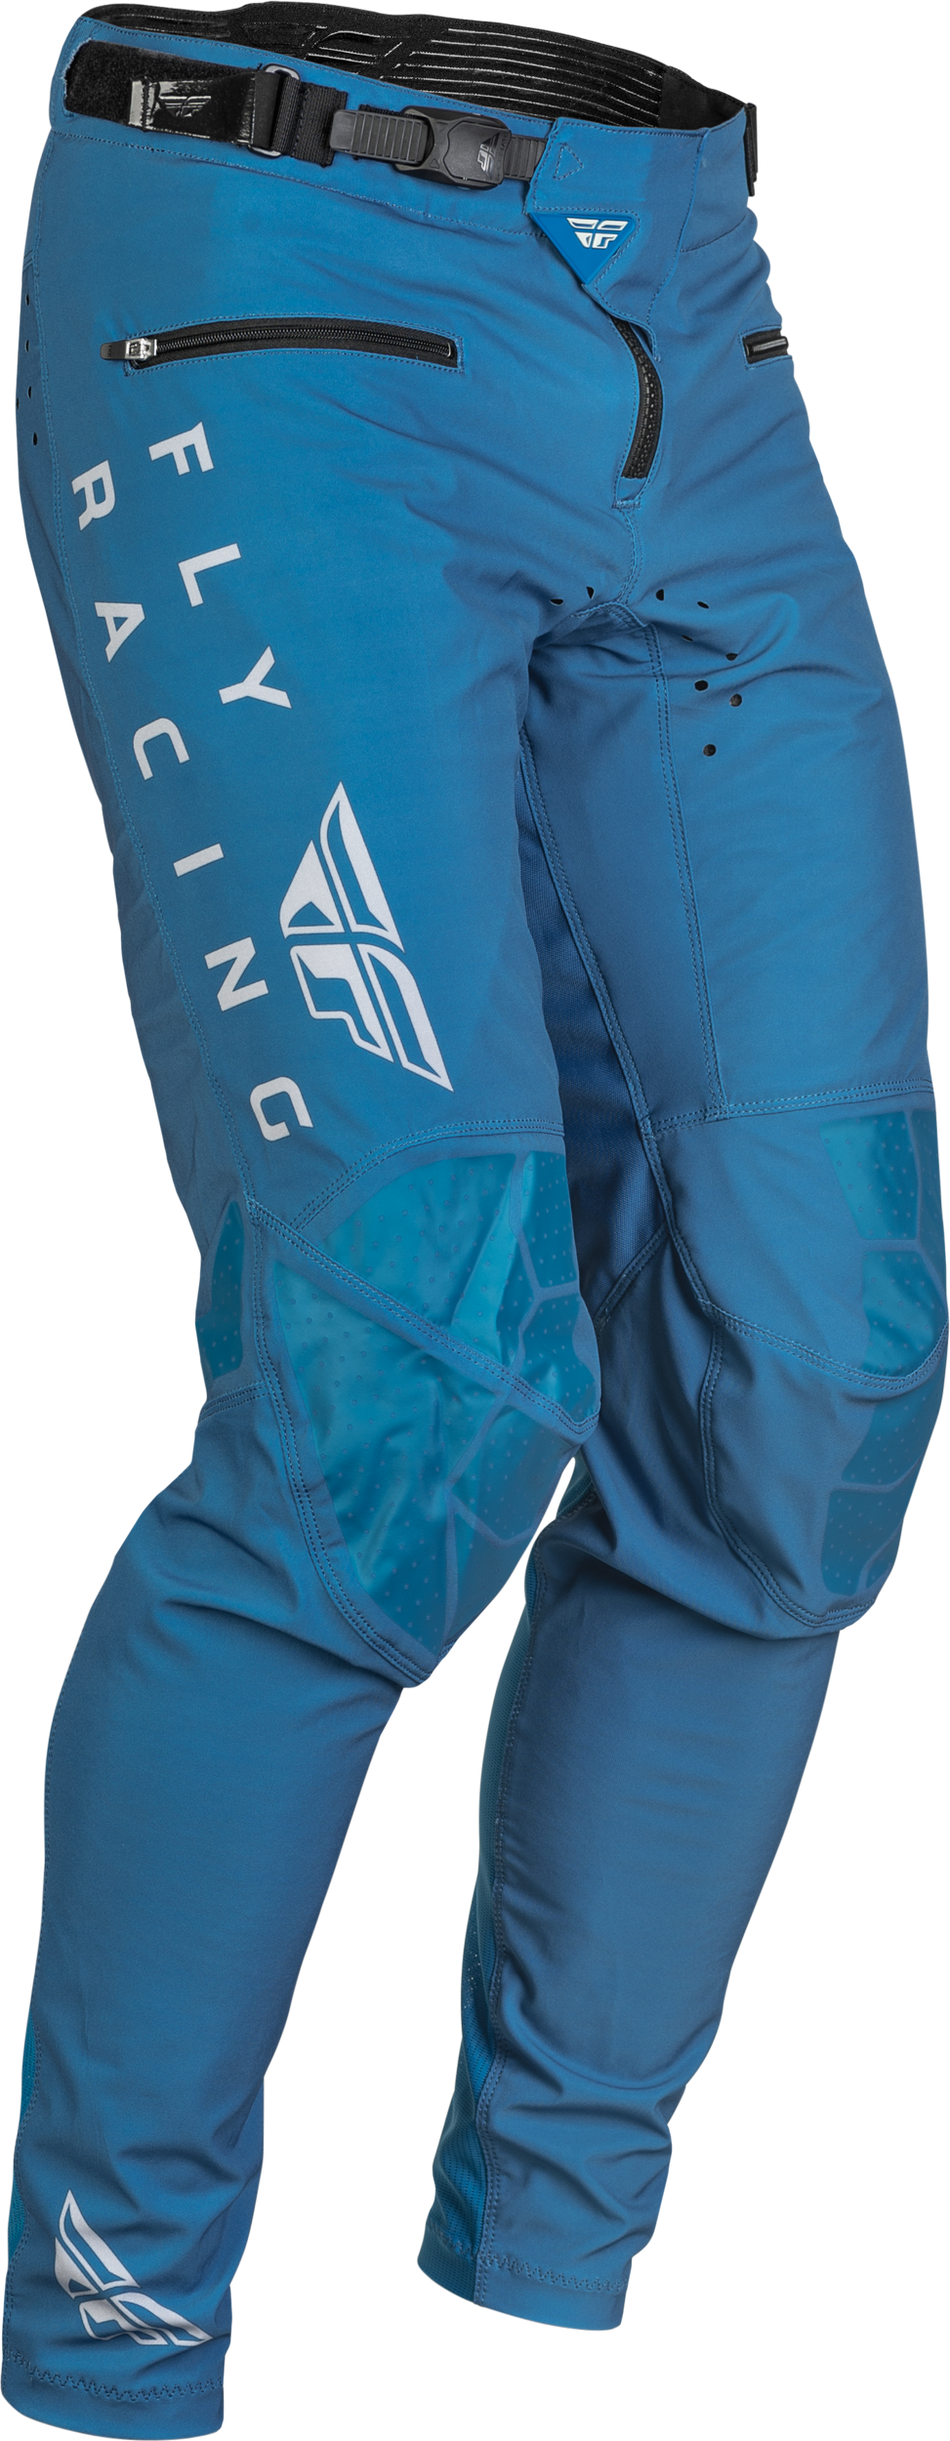 FLY RACING Youth Radium Bicycle Pants Slate Blue/Grey Sz 26 376-04426